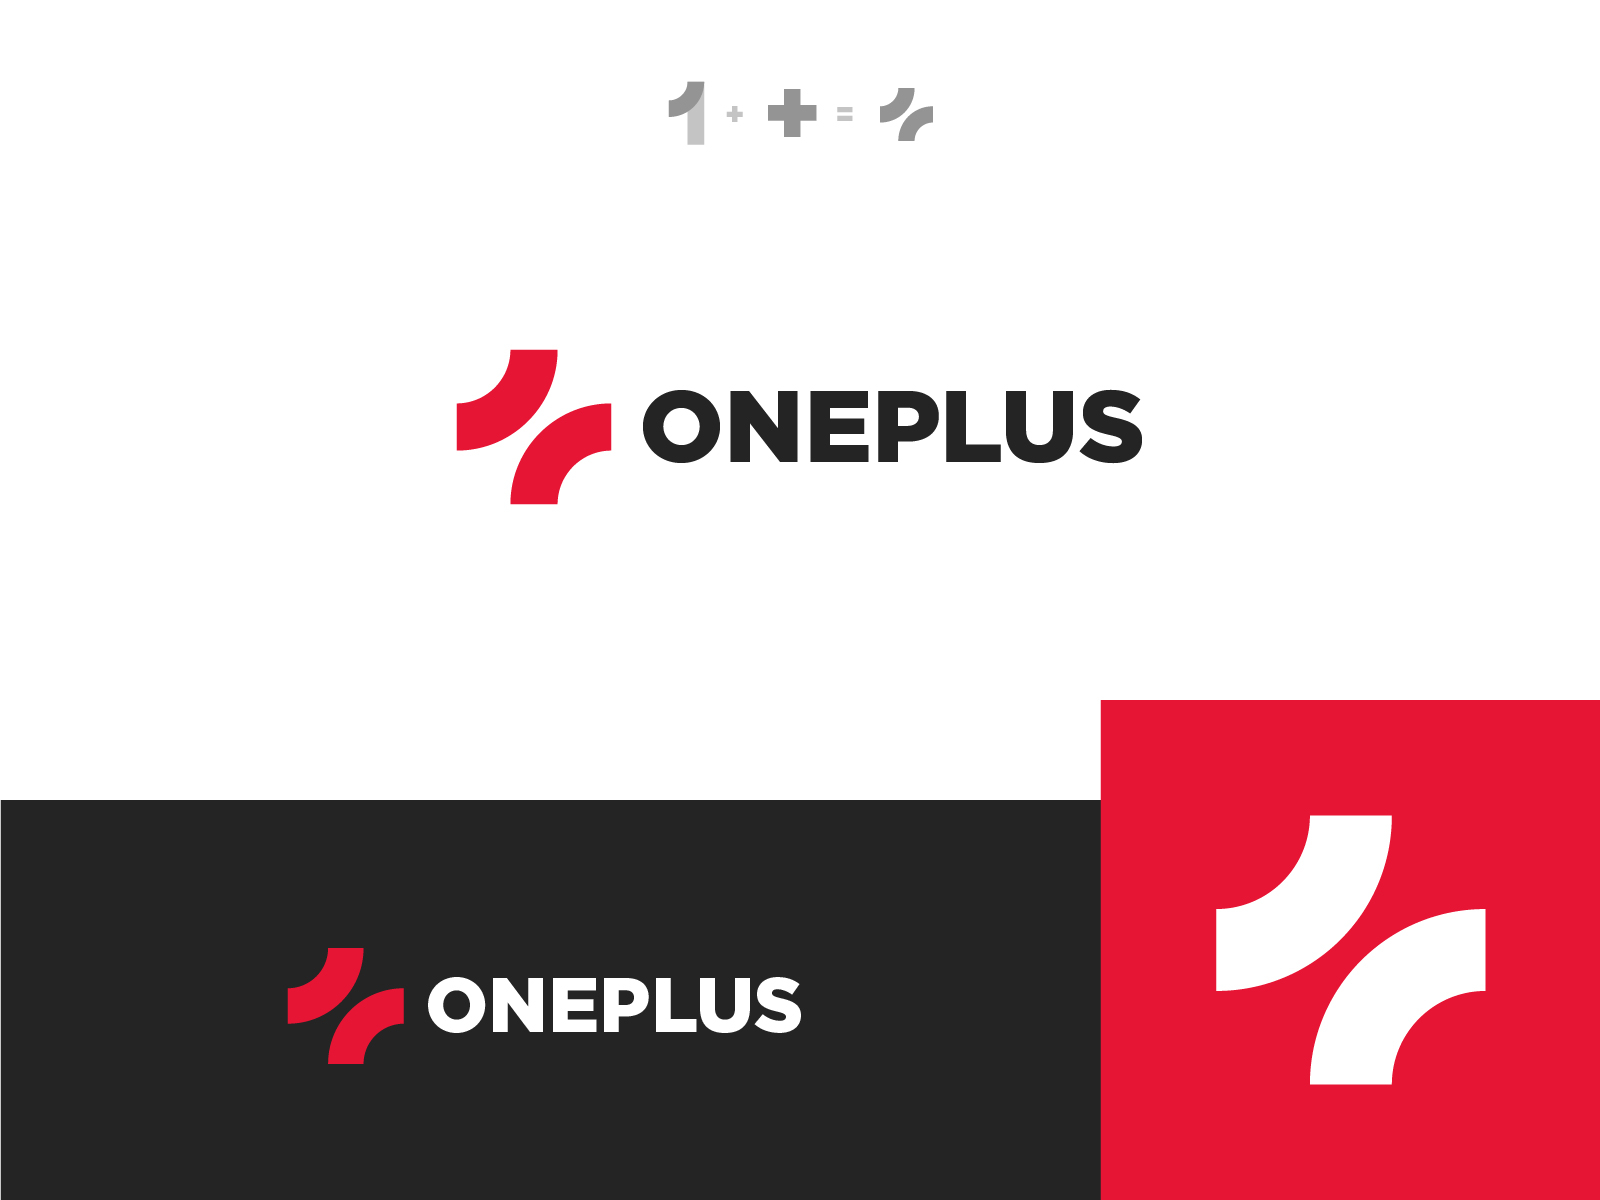 The logo OnePlus uses Neue Haas Grotesk Display Pro 65 Medium Font